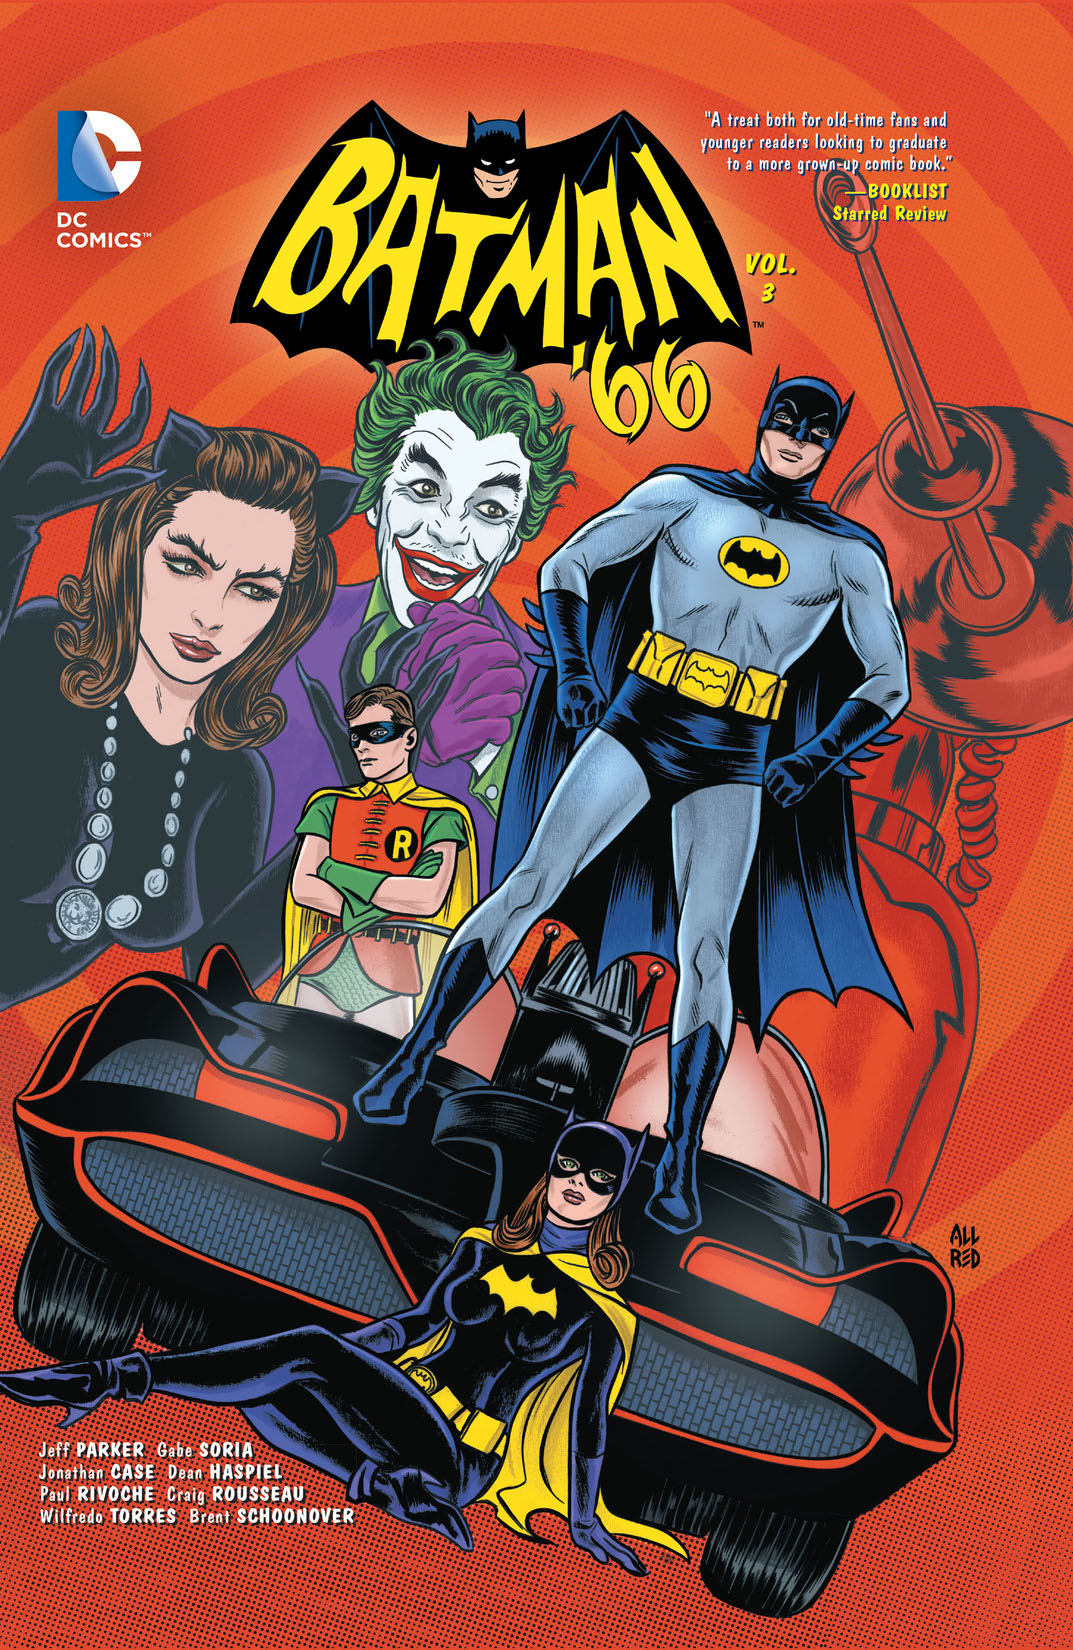 Batman '66 Vol. 3 preview images